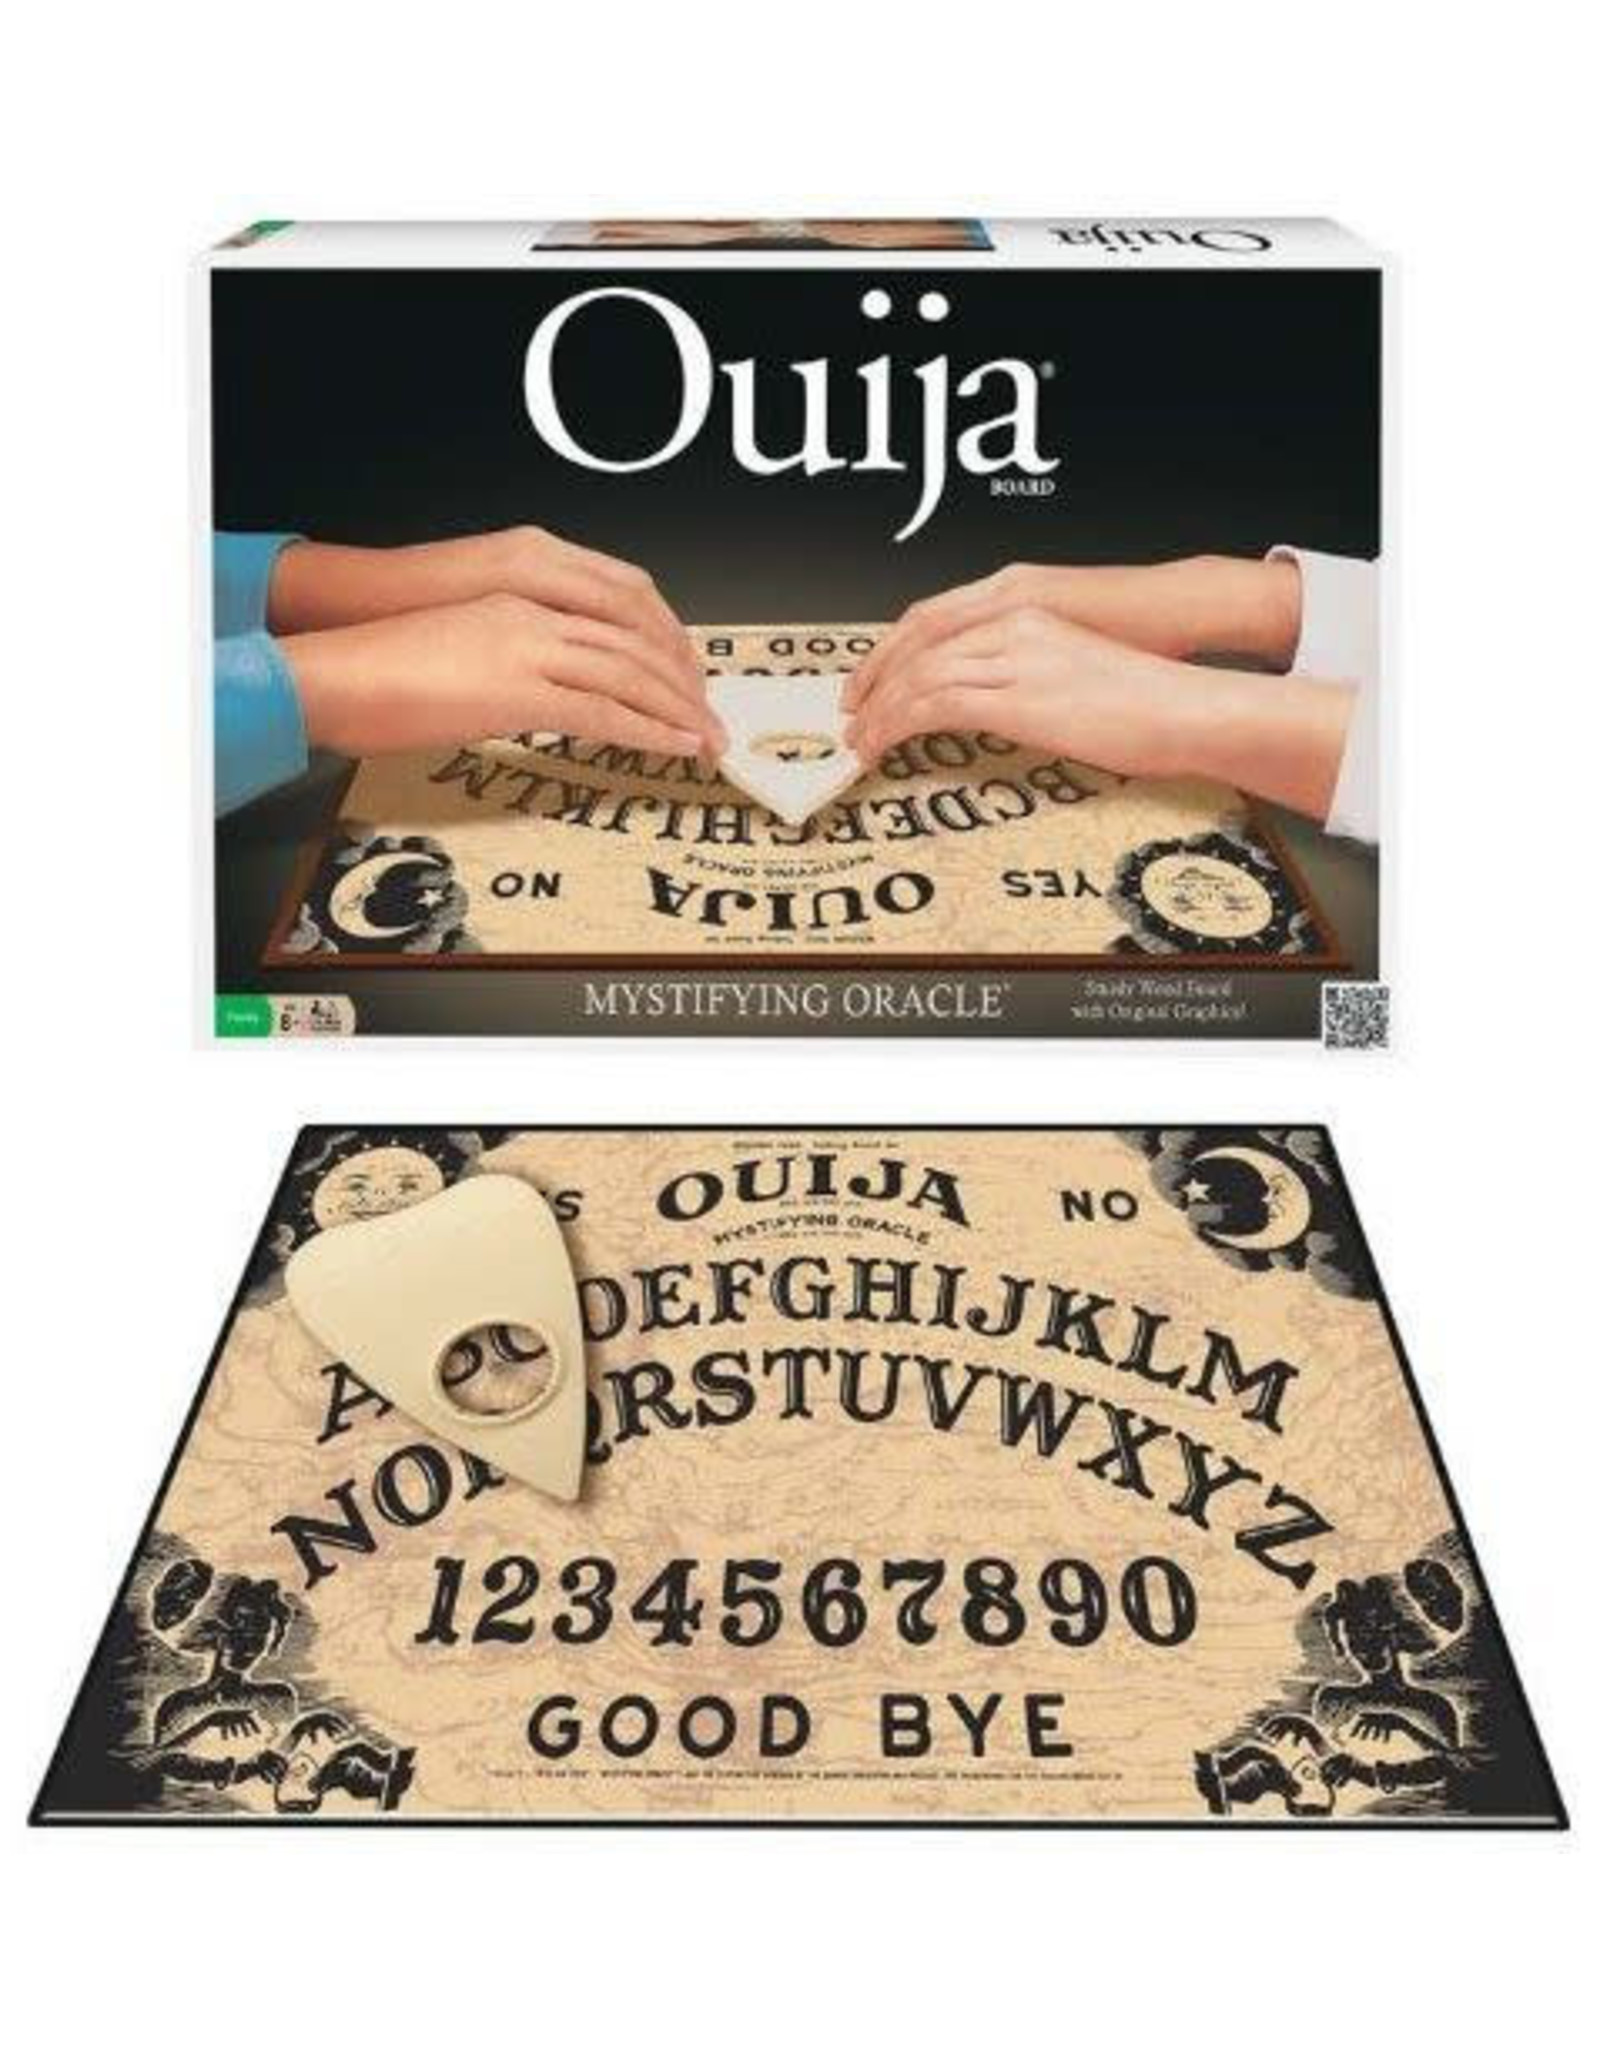 Classic Ouija